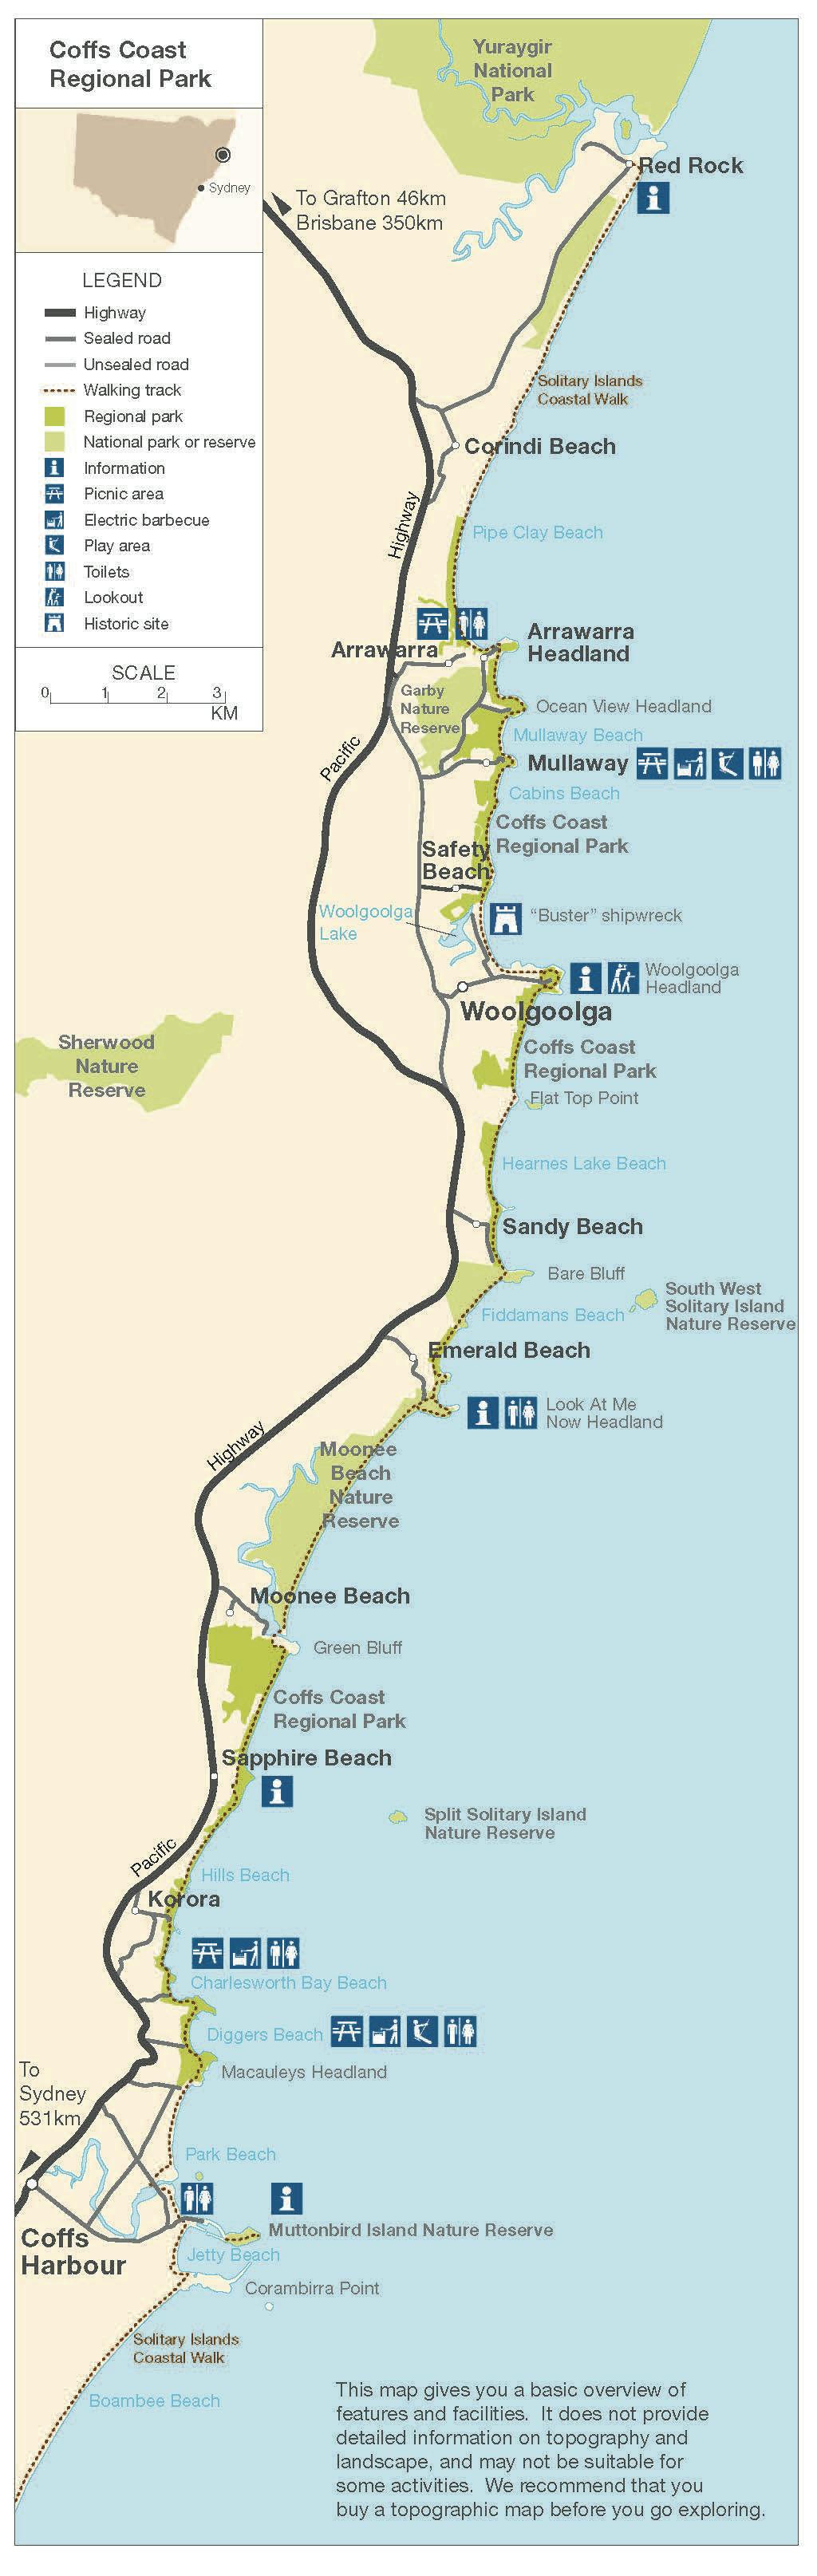 coffs-coast-regional-park-map (1).jpg